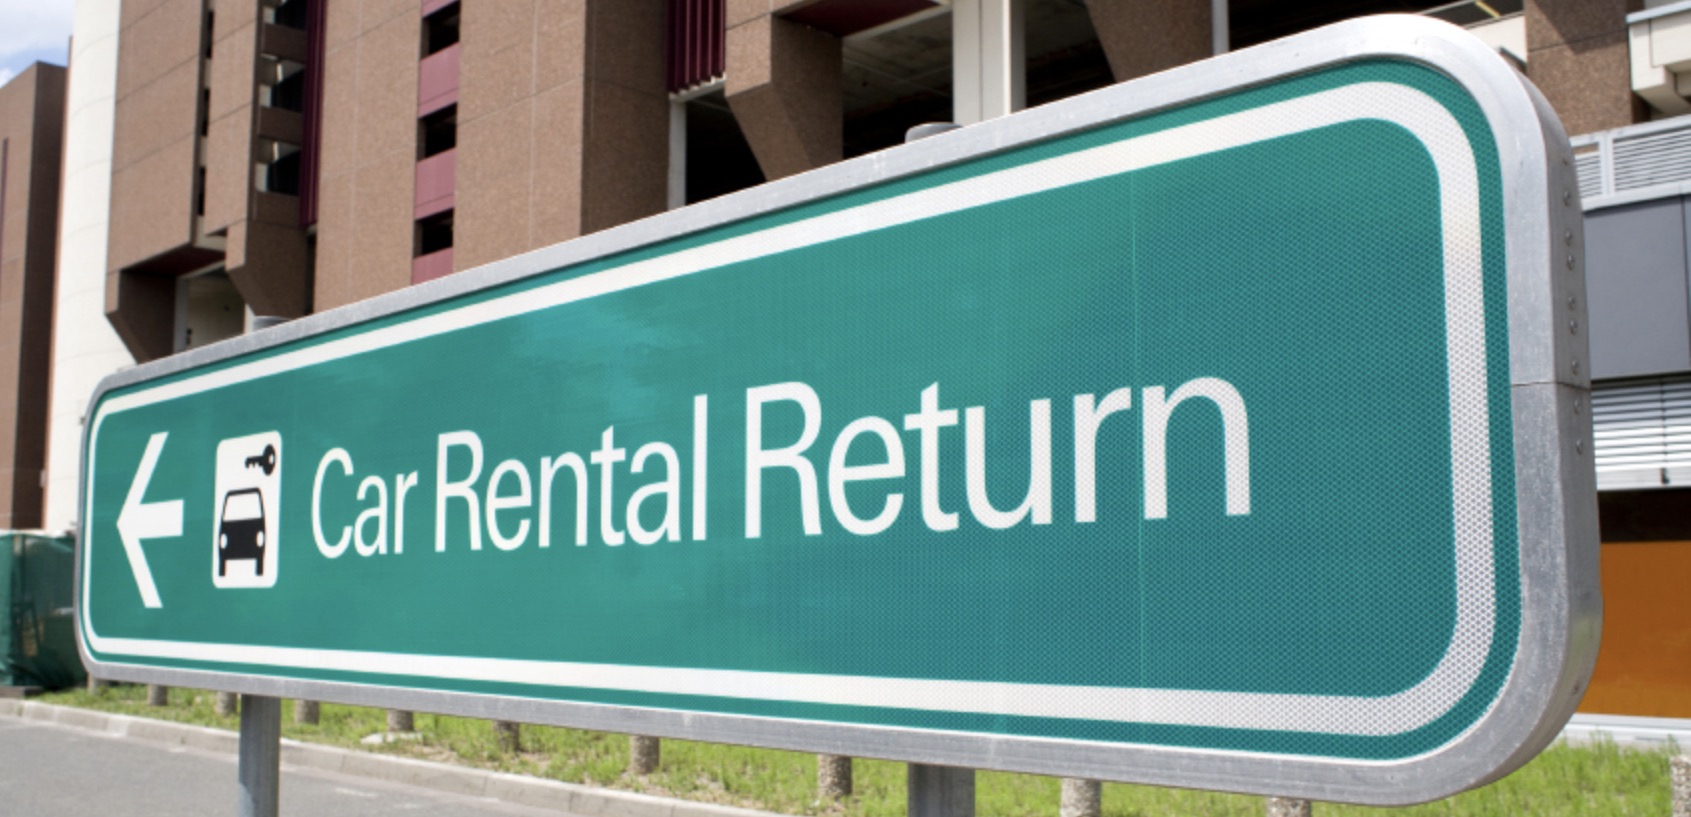 Rental Car Return